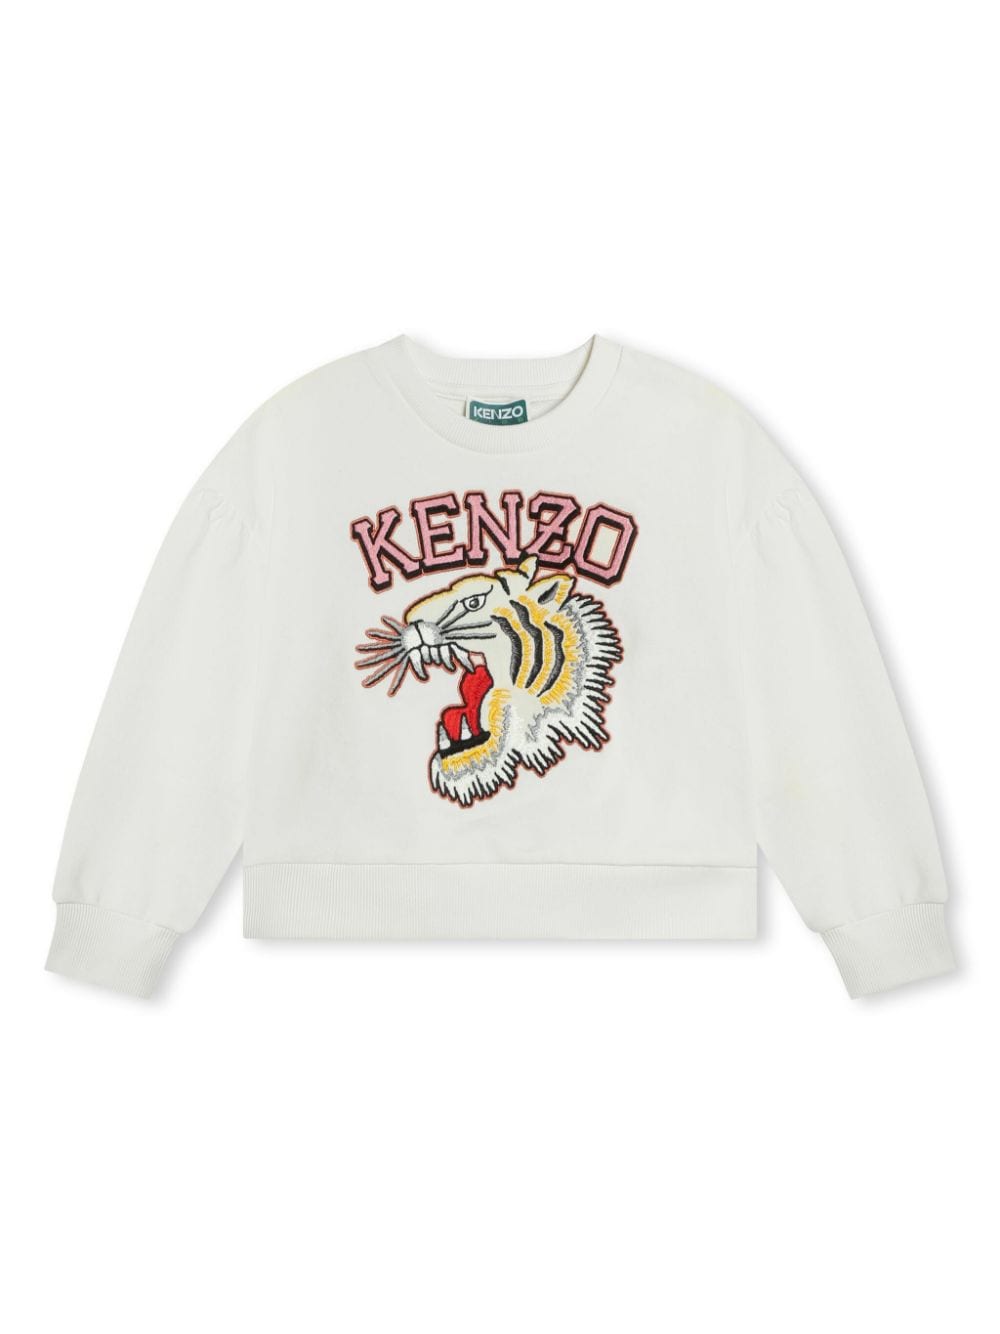 Image 1 of Kenzo Kids sudadera con tigre bordado